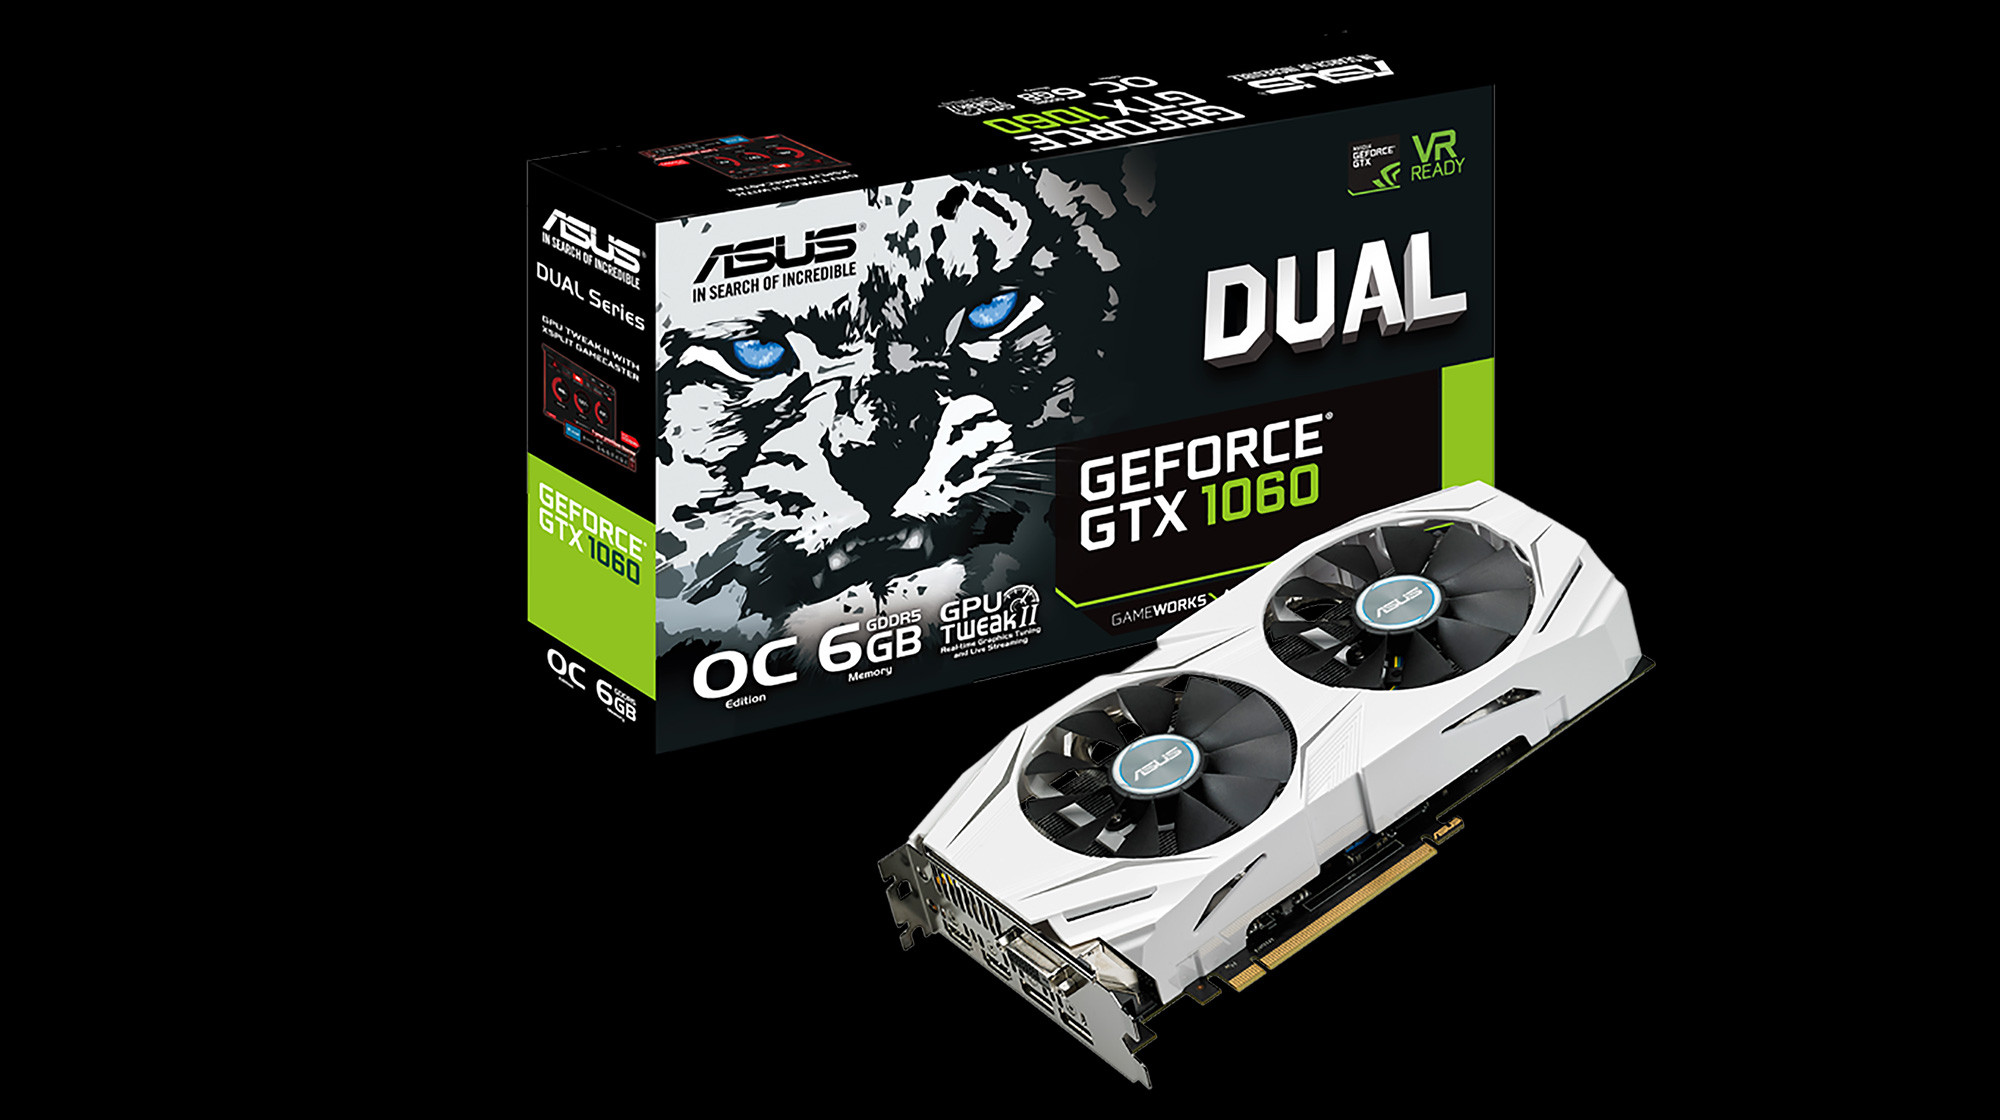 ASUS GeForce GTX 1060 6GB GDDR5 Dual Edition - Overclocked - VR Ready